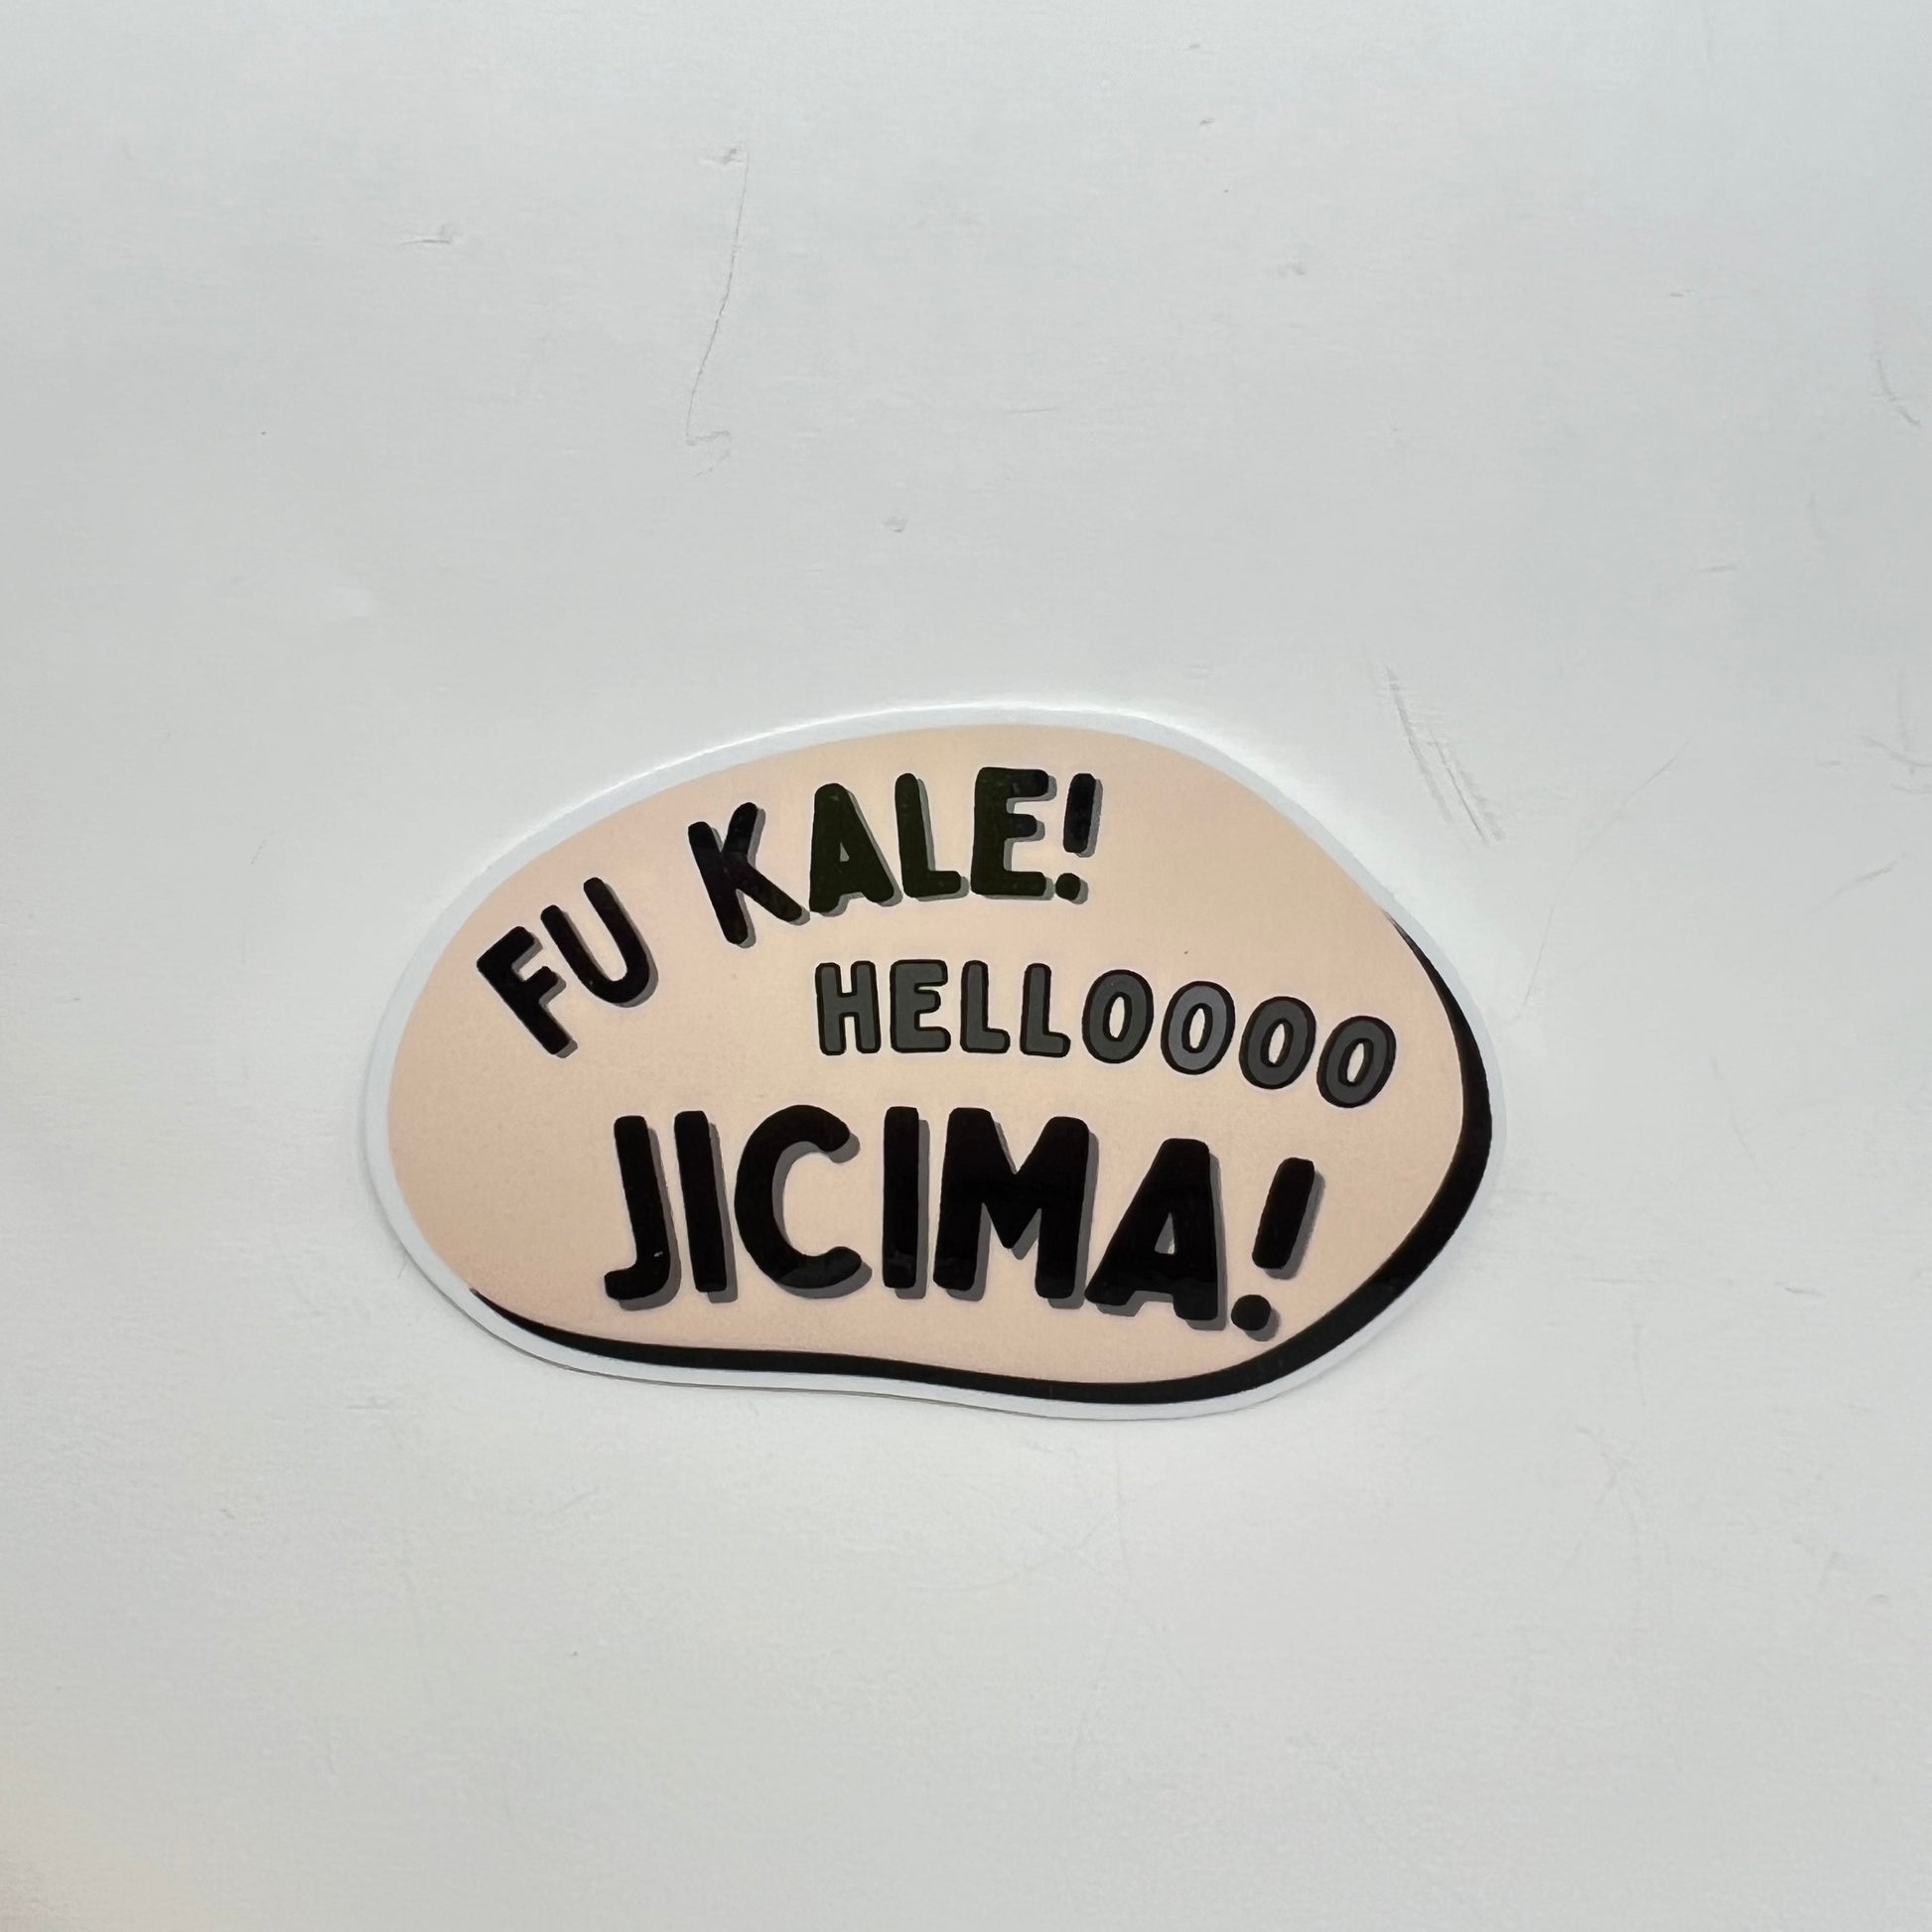 peach colored blob sticker with words "FU KALE! HELLOOOO JICIMA!